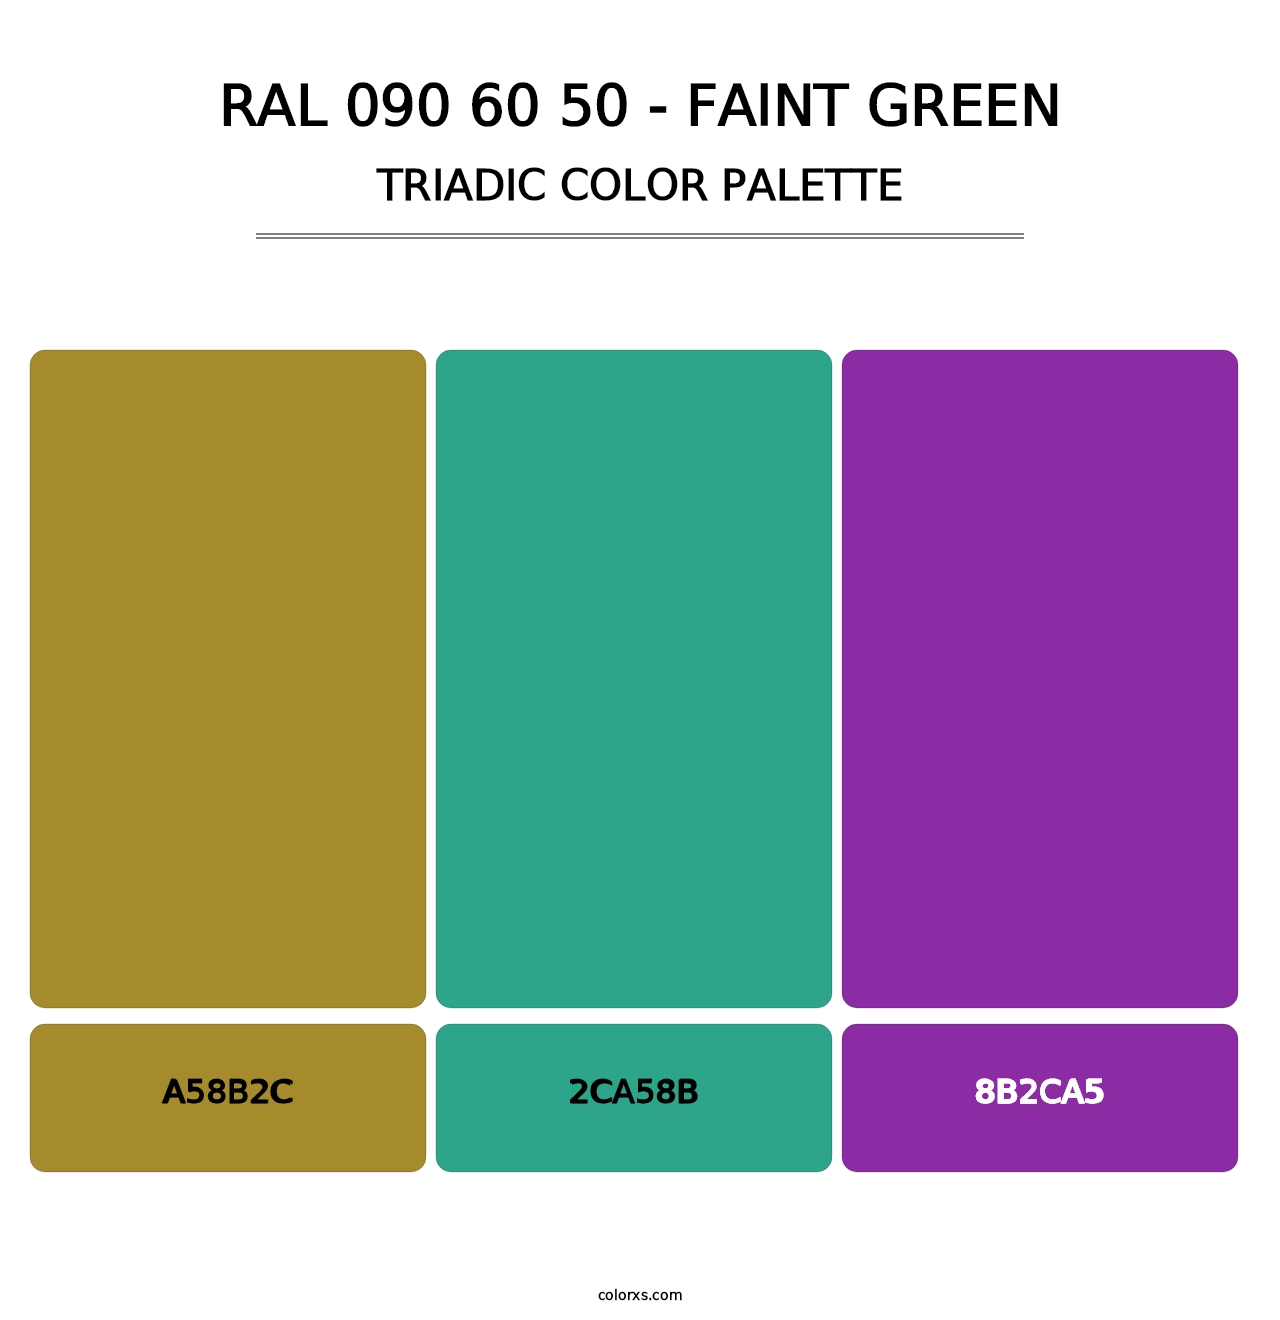 RAL 090 60 50 - Faint Green - Triadic Color Palette